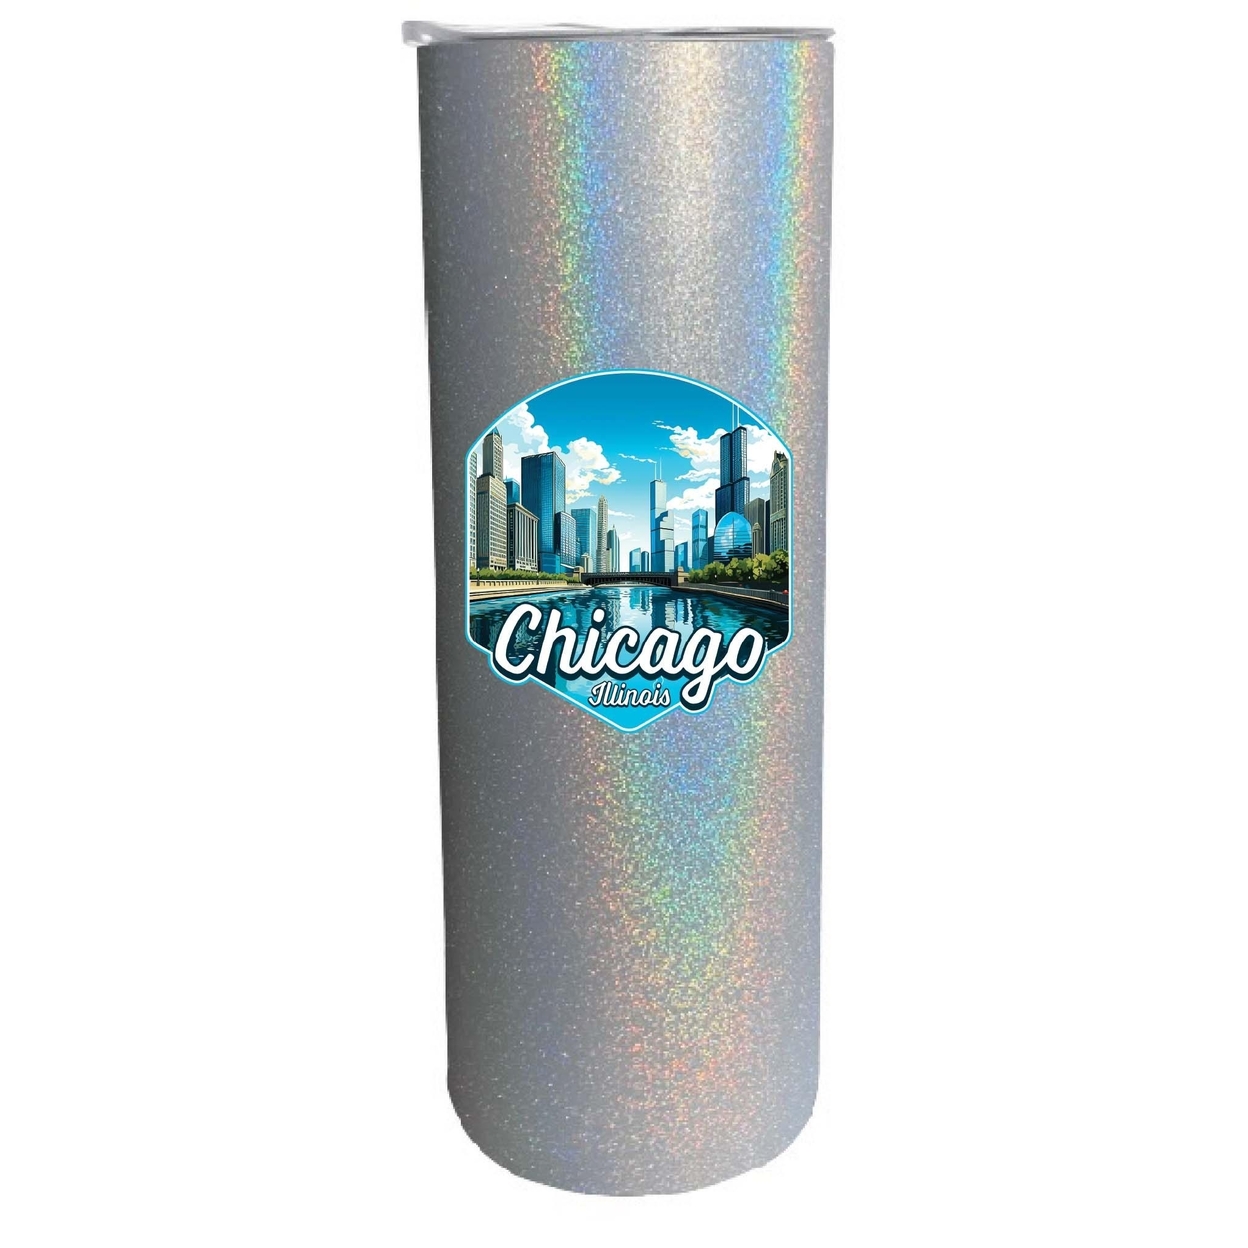 Chicago Illinois A Souvenir 20 Oz Insulated Skinny Tumbler - Gray Glitter,,2-Pack